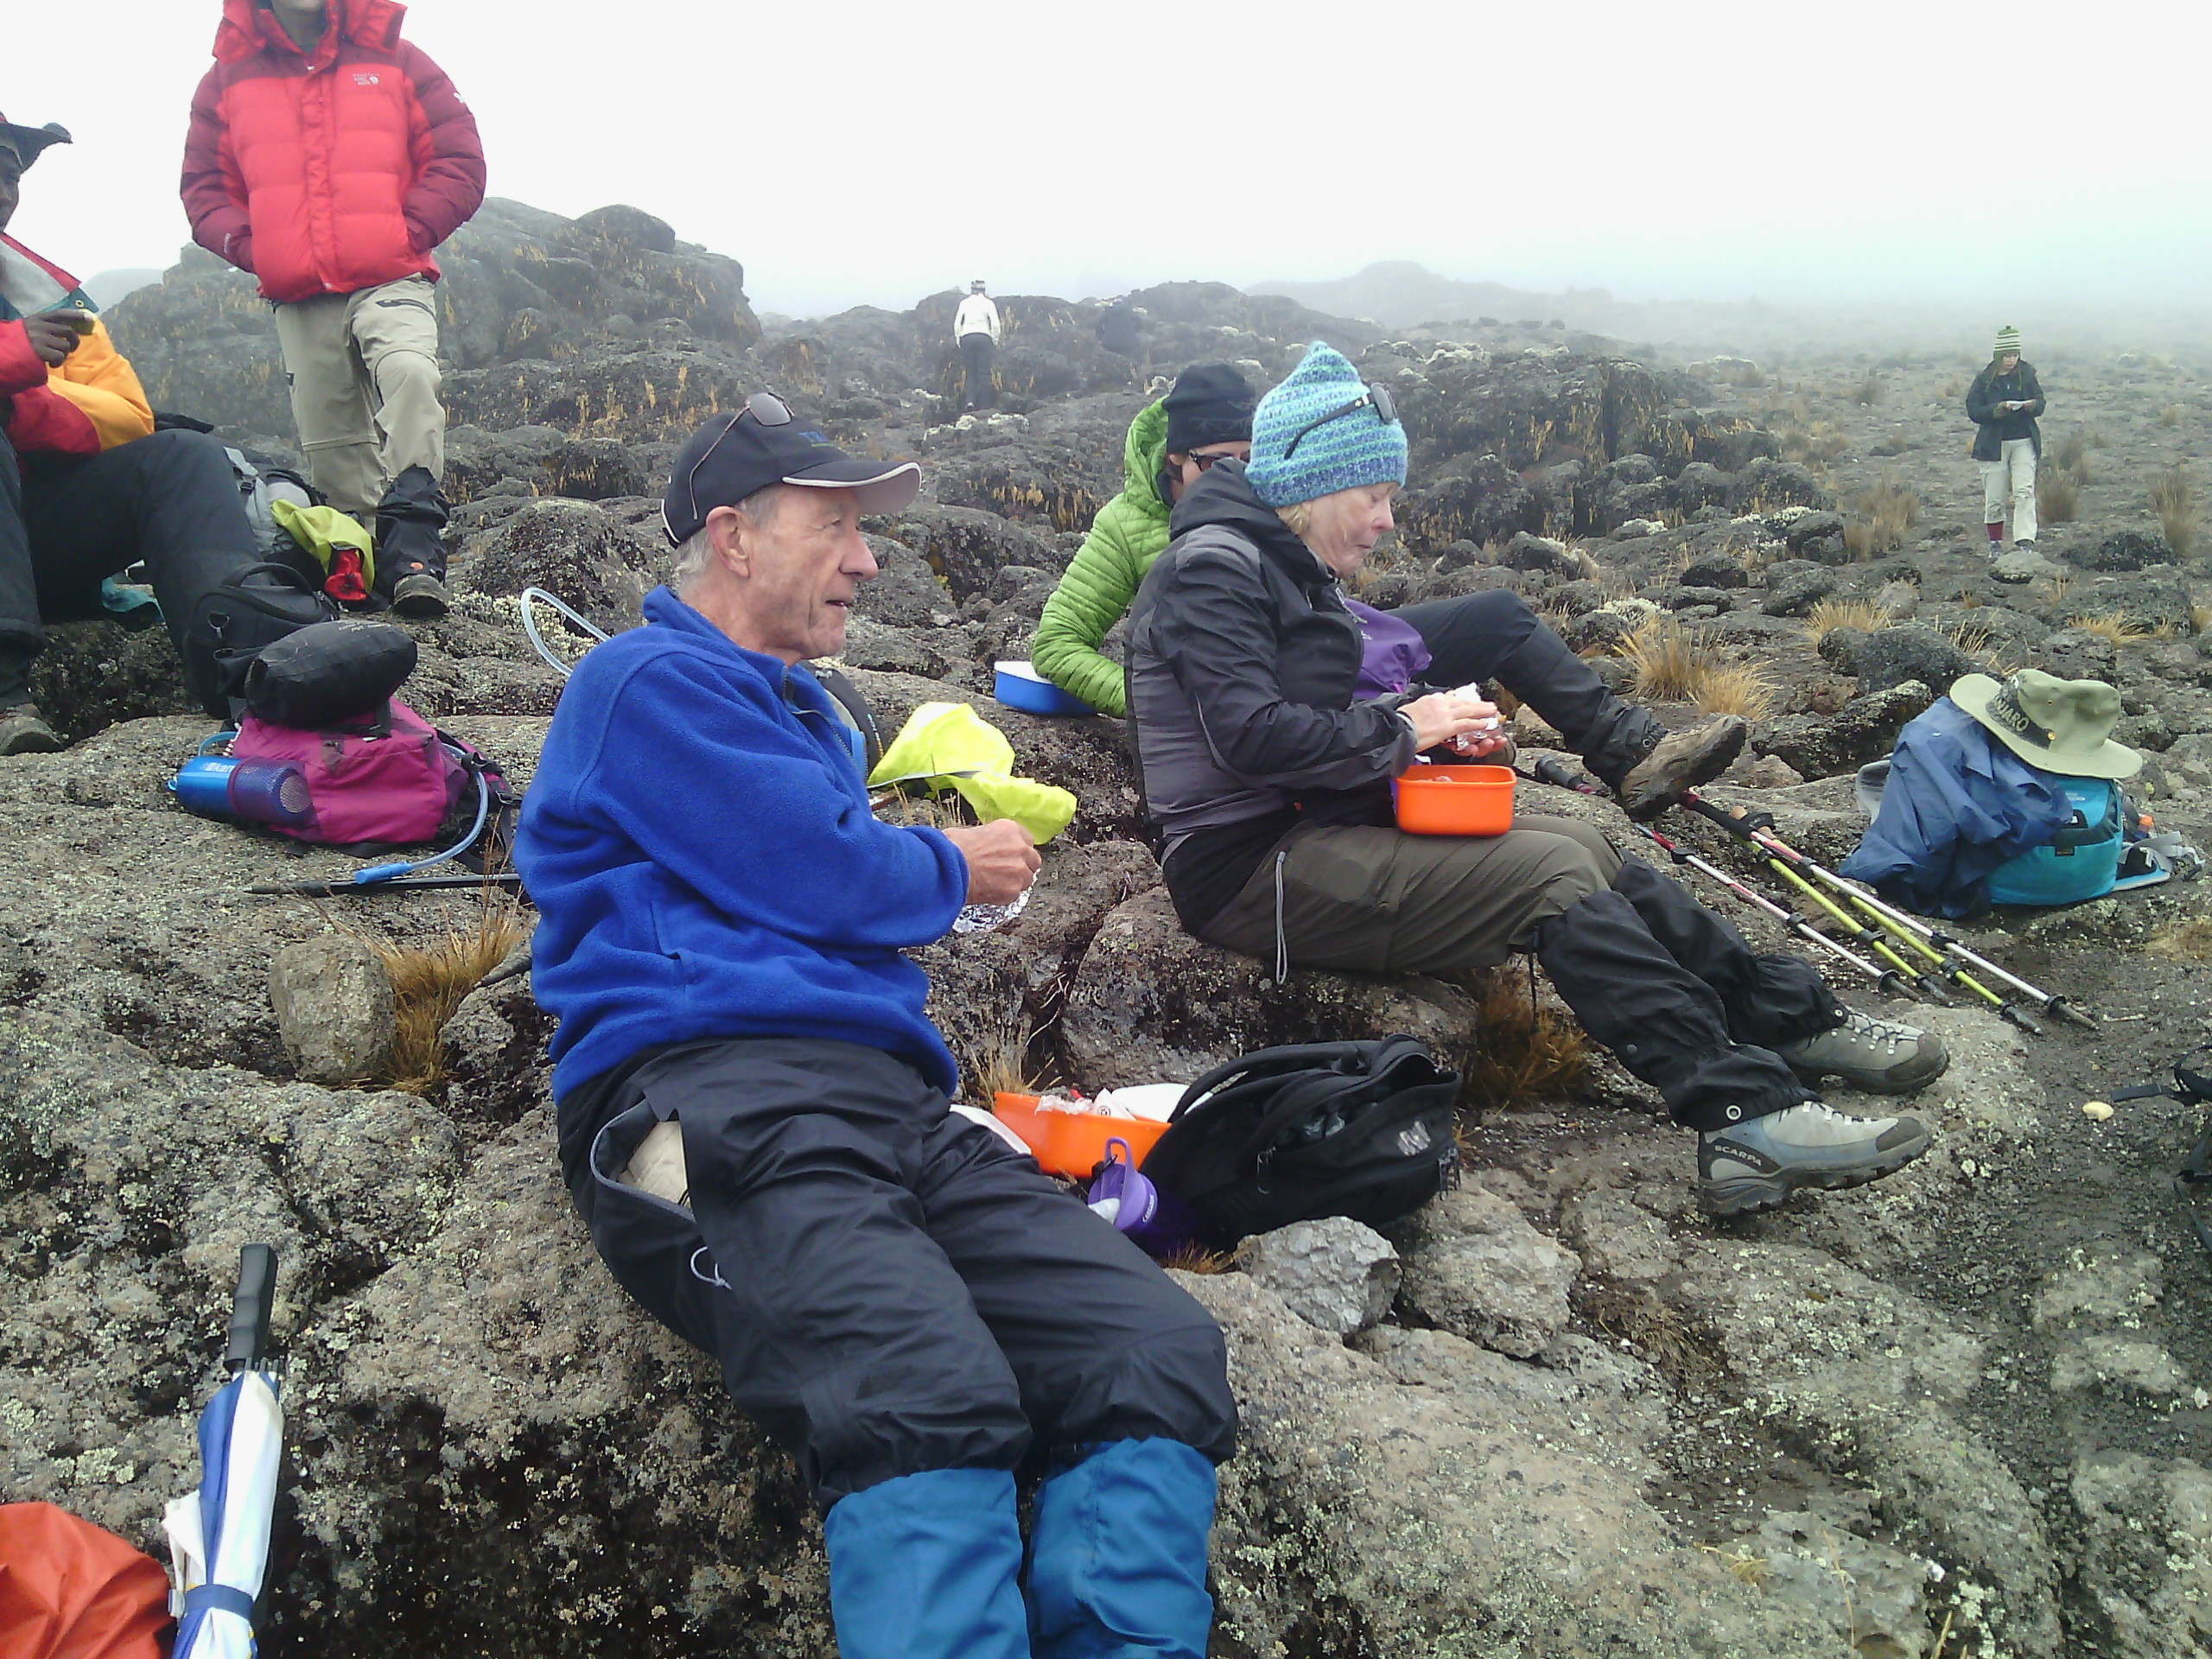 Rongai route Climbing Kilimanjaro